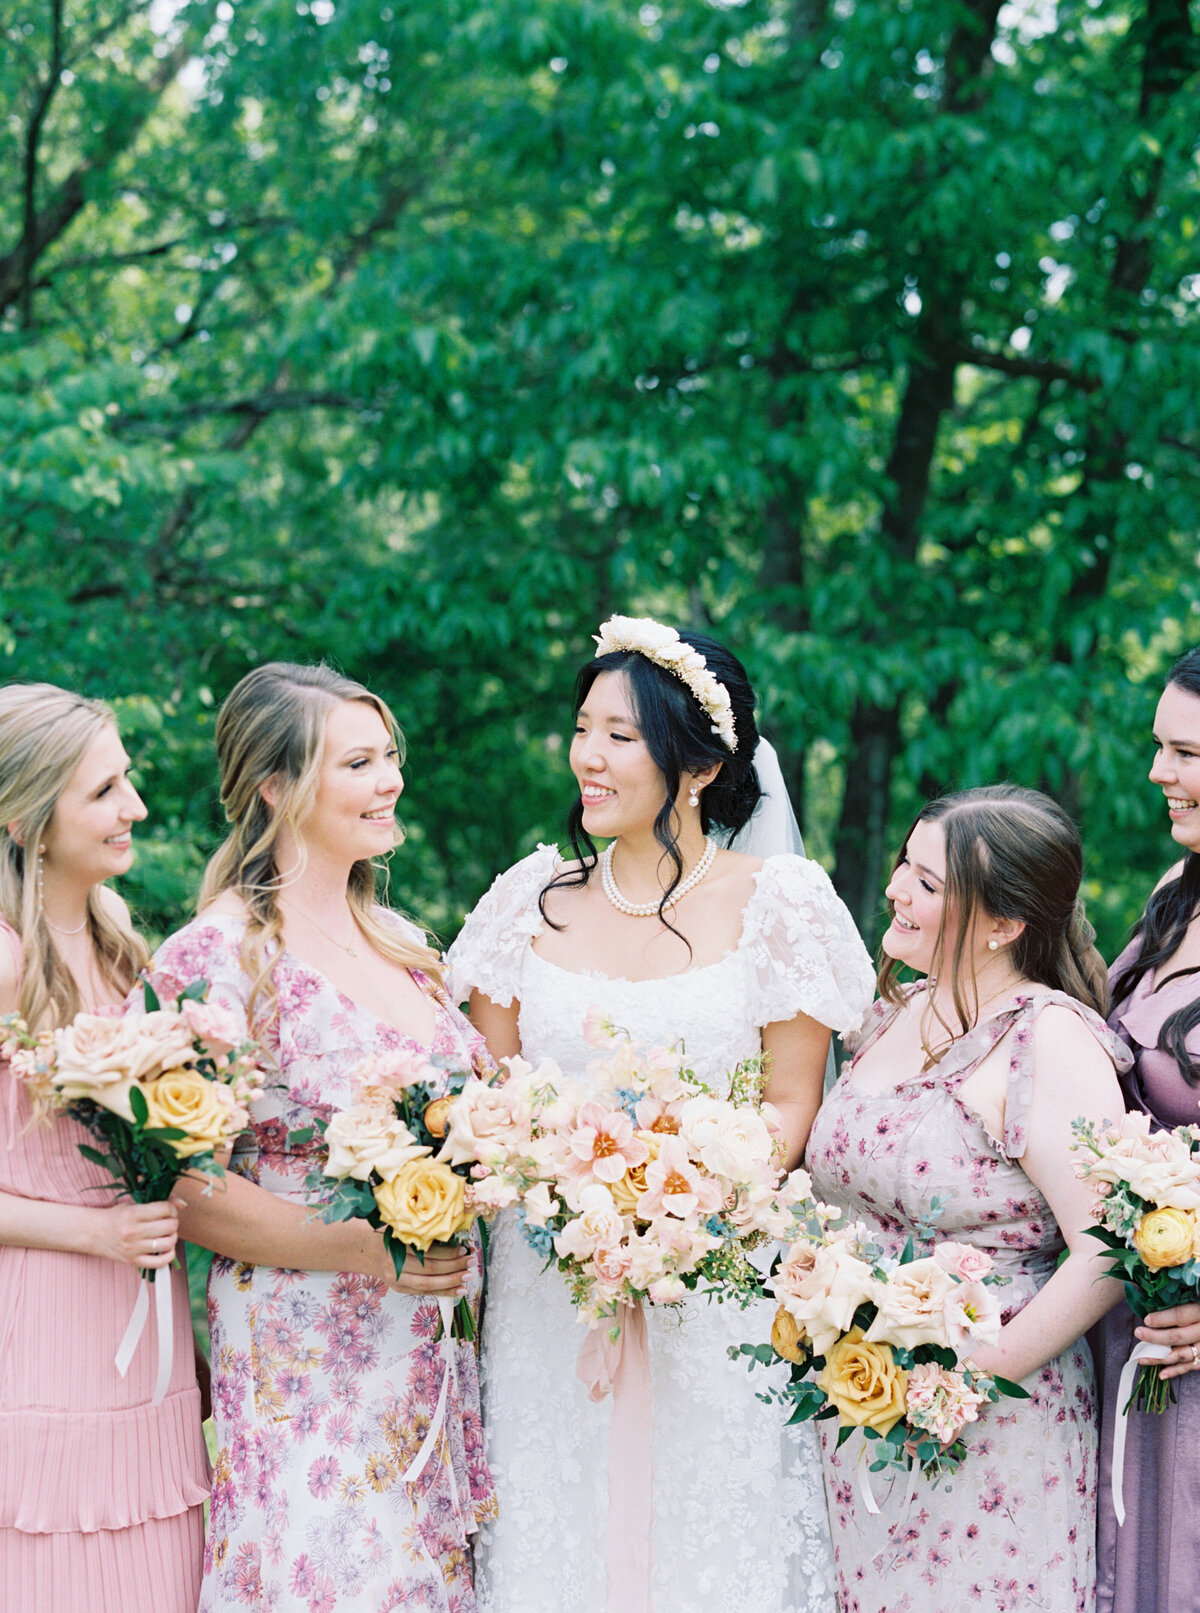 Sarah Rae Floral Designs Wedding Event Florist Flowers Kentucky Chic Whimsical Romantic Weddings10